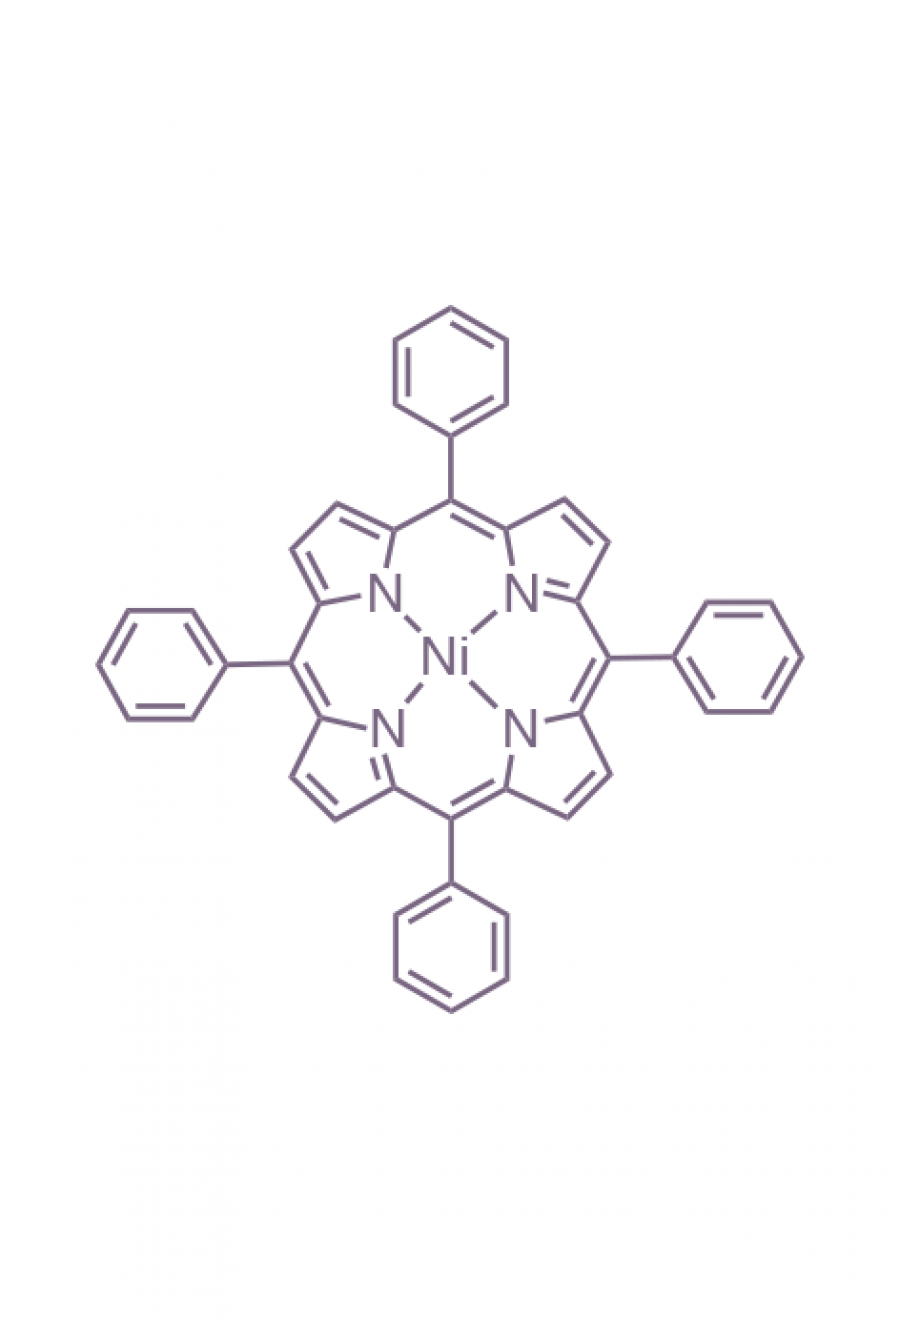 nickel(II) 5,10,15,20-(tetraphenyl)porphyrin